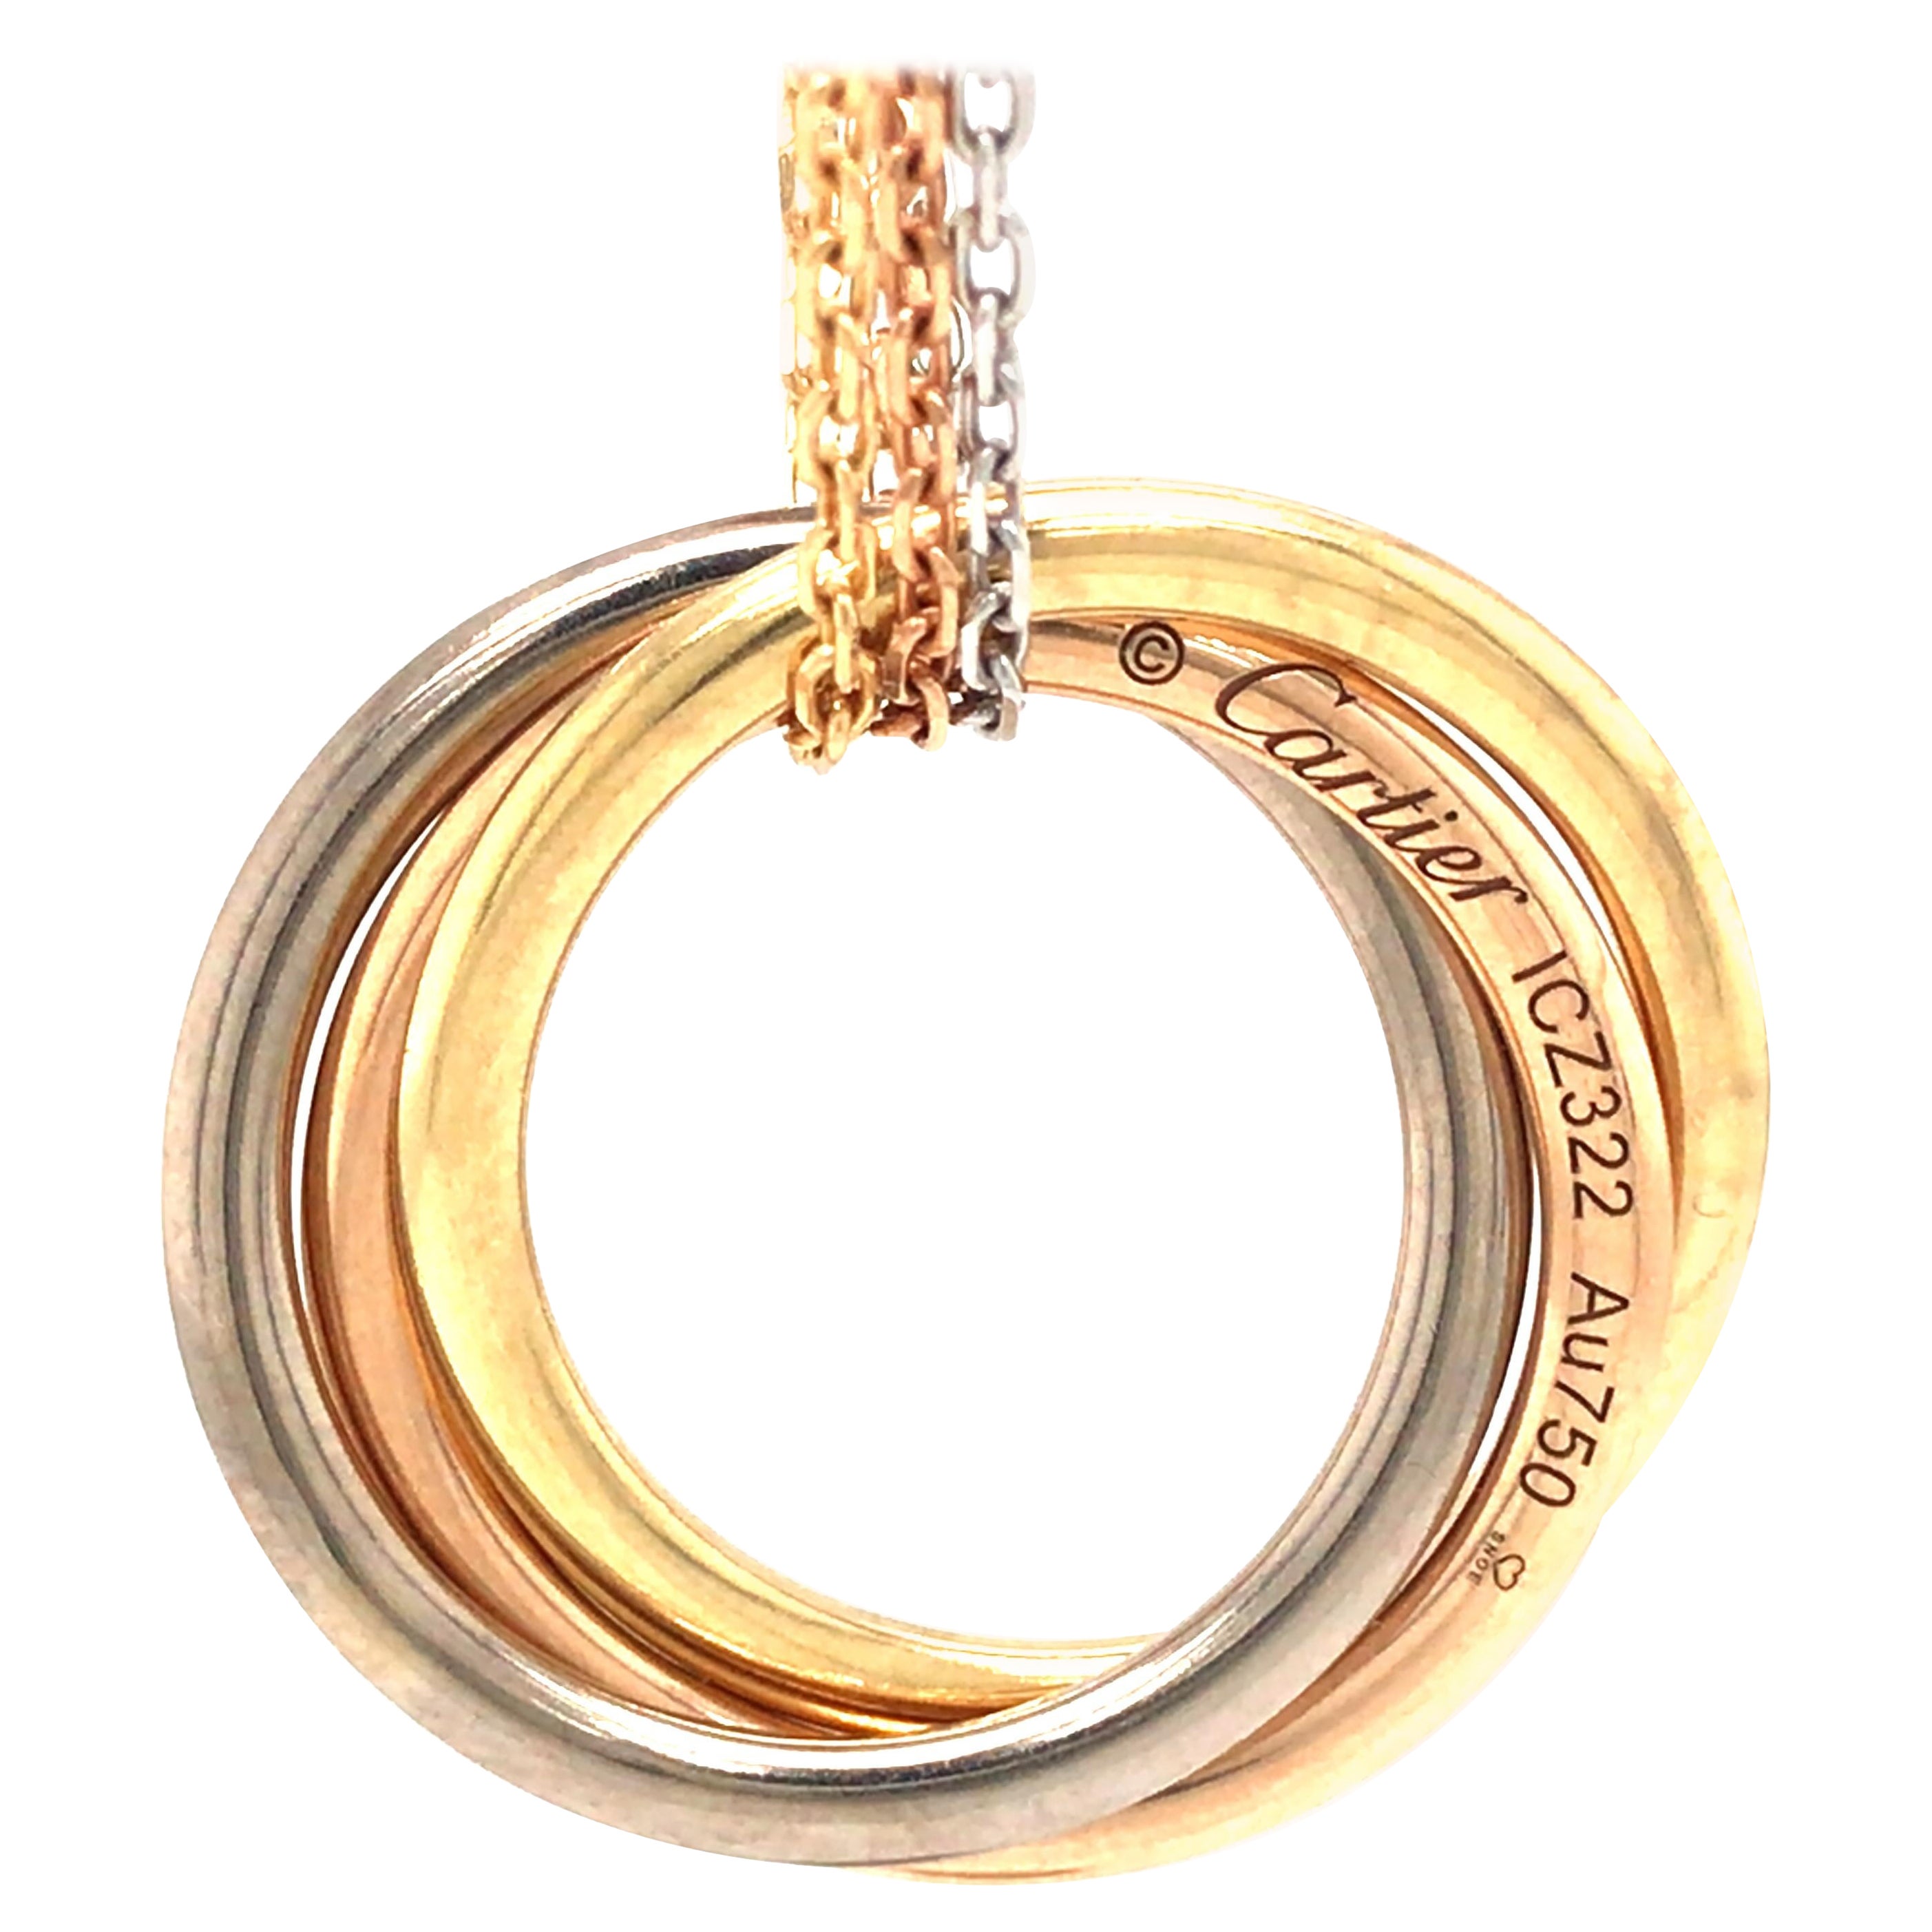 Cartier 18K Tri-Gold Trinity Pendant Necklace